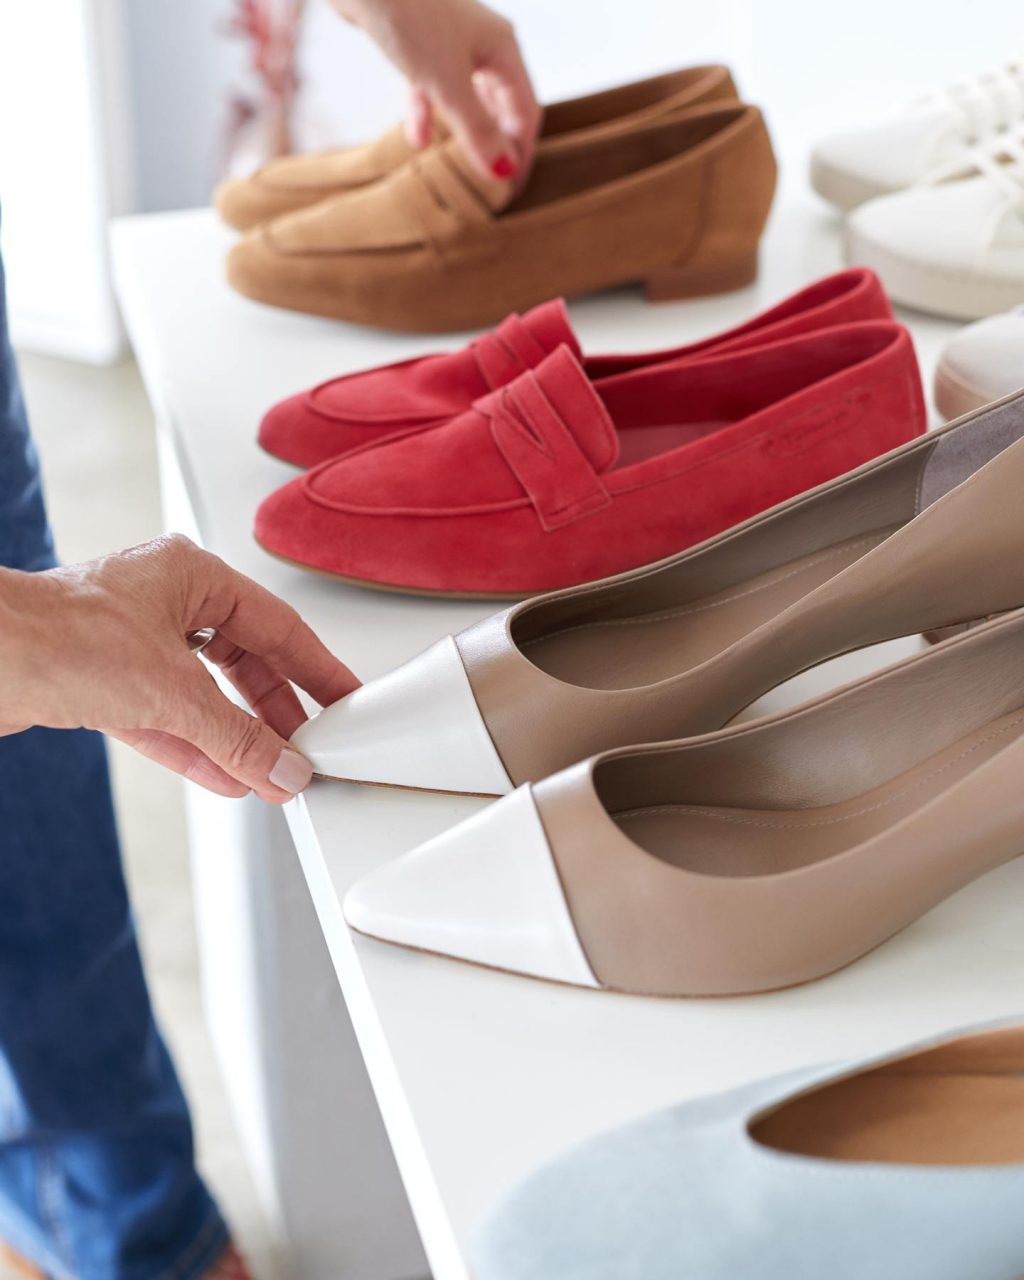 7 tipos de zapatos para mujeres con pies anchos - Mundo Positivo